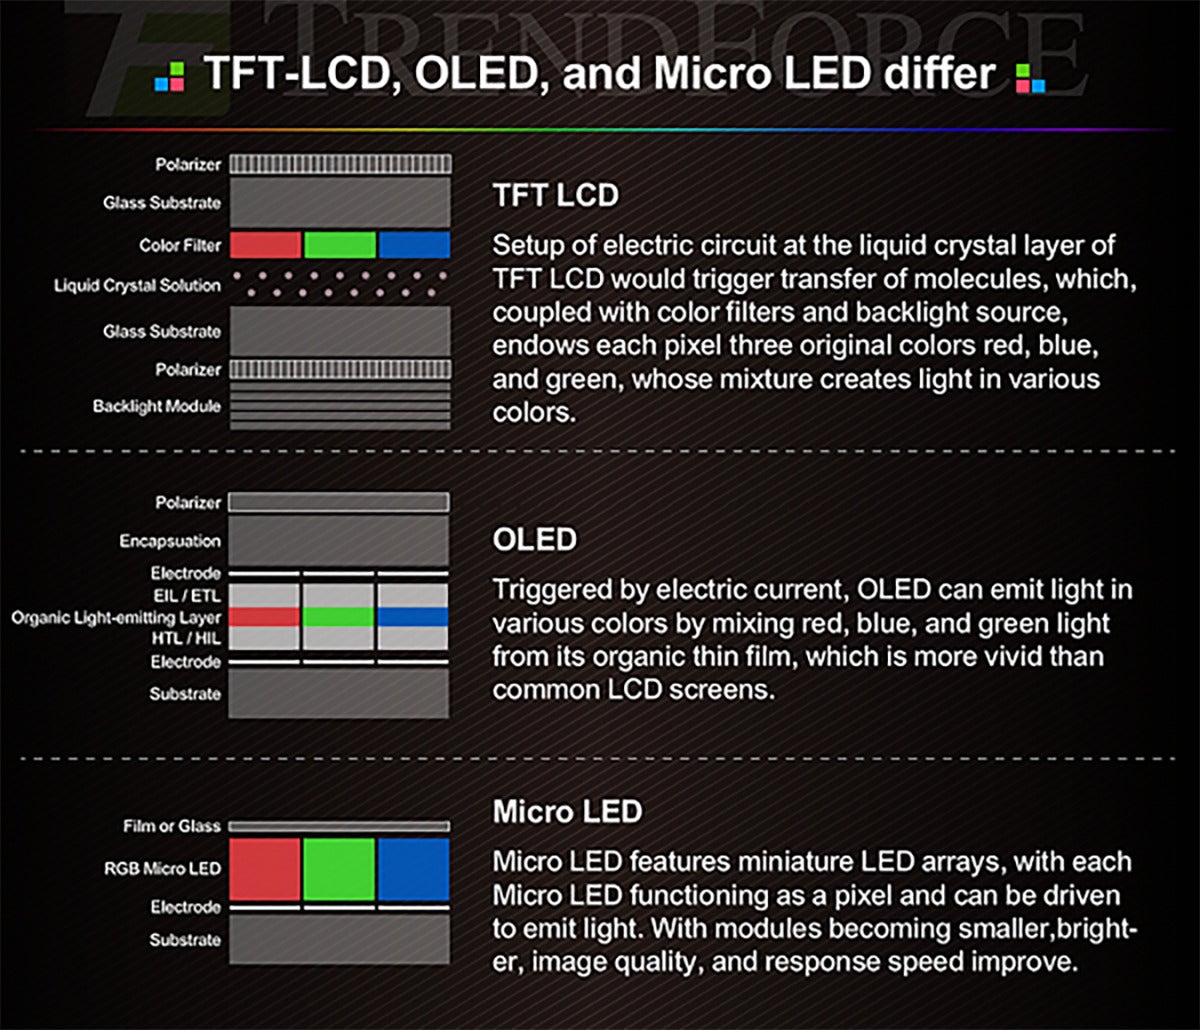 Mini-LED vs. micro-LED: Why is Apple adopting mini-LED in 2021